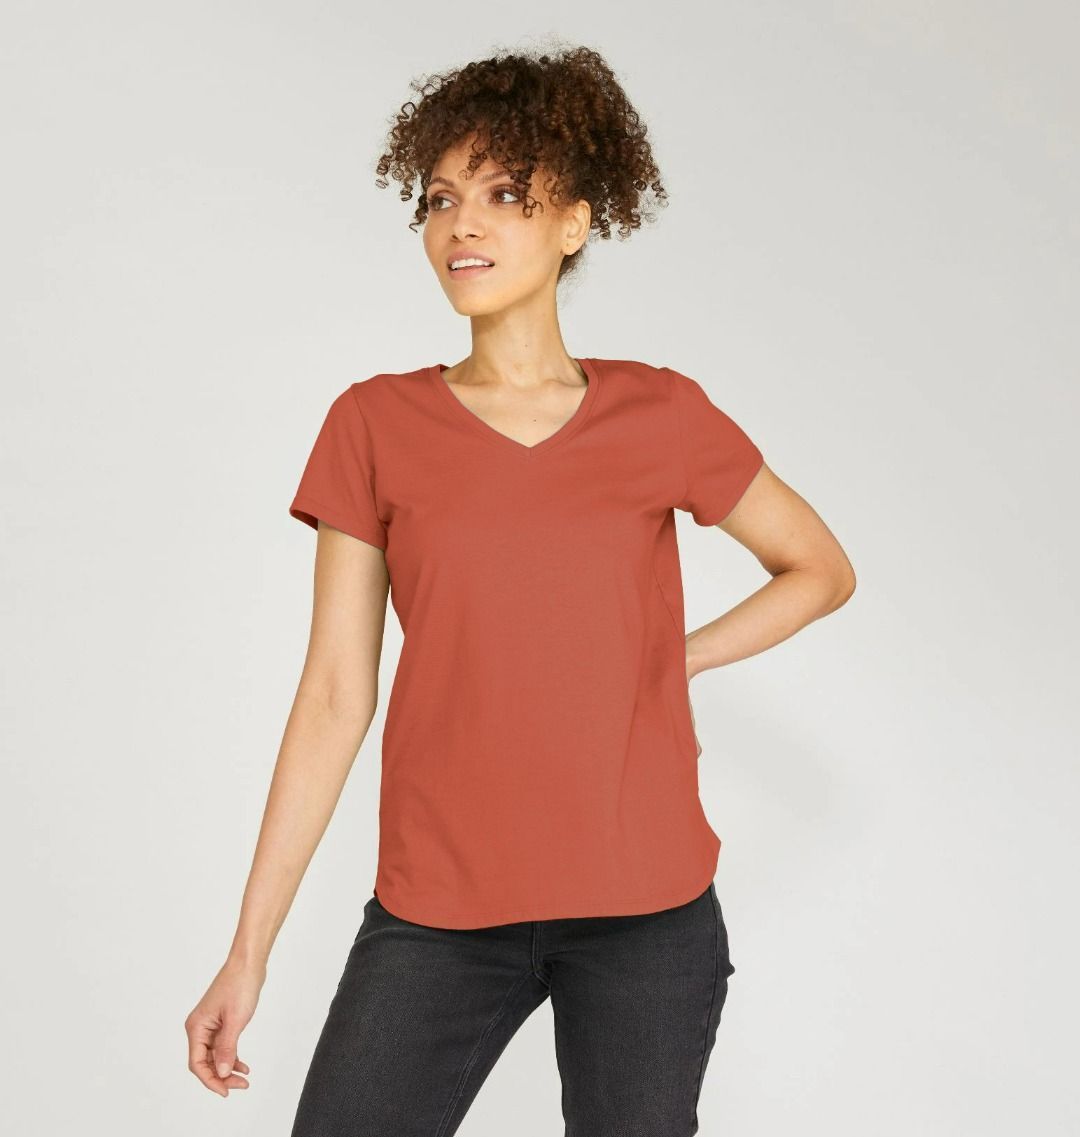 Women's organic cotton v-neck t-shirt